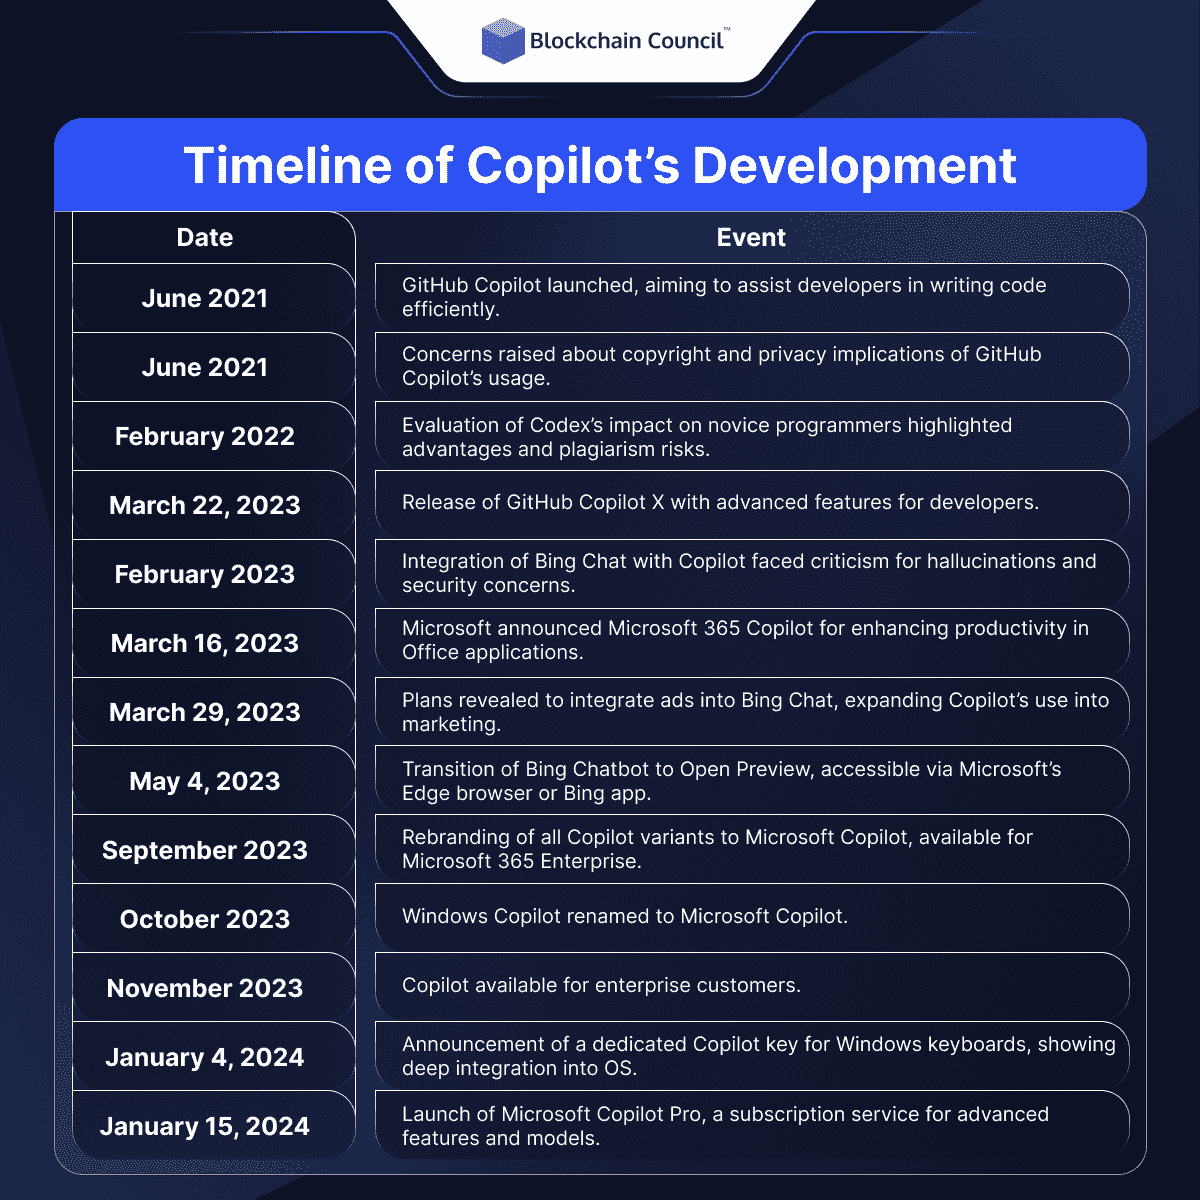 Timeline of Copilot's Development